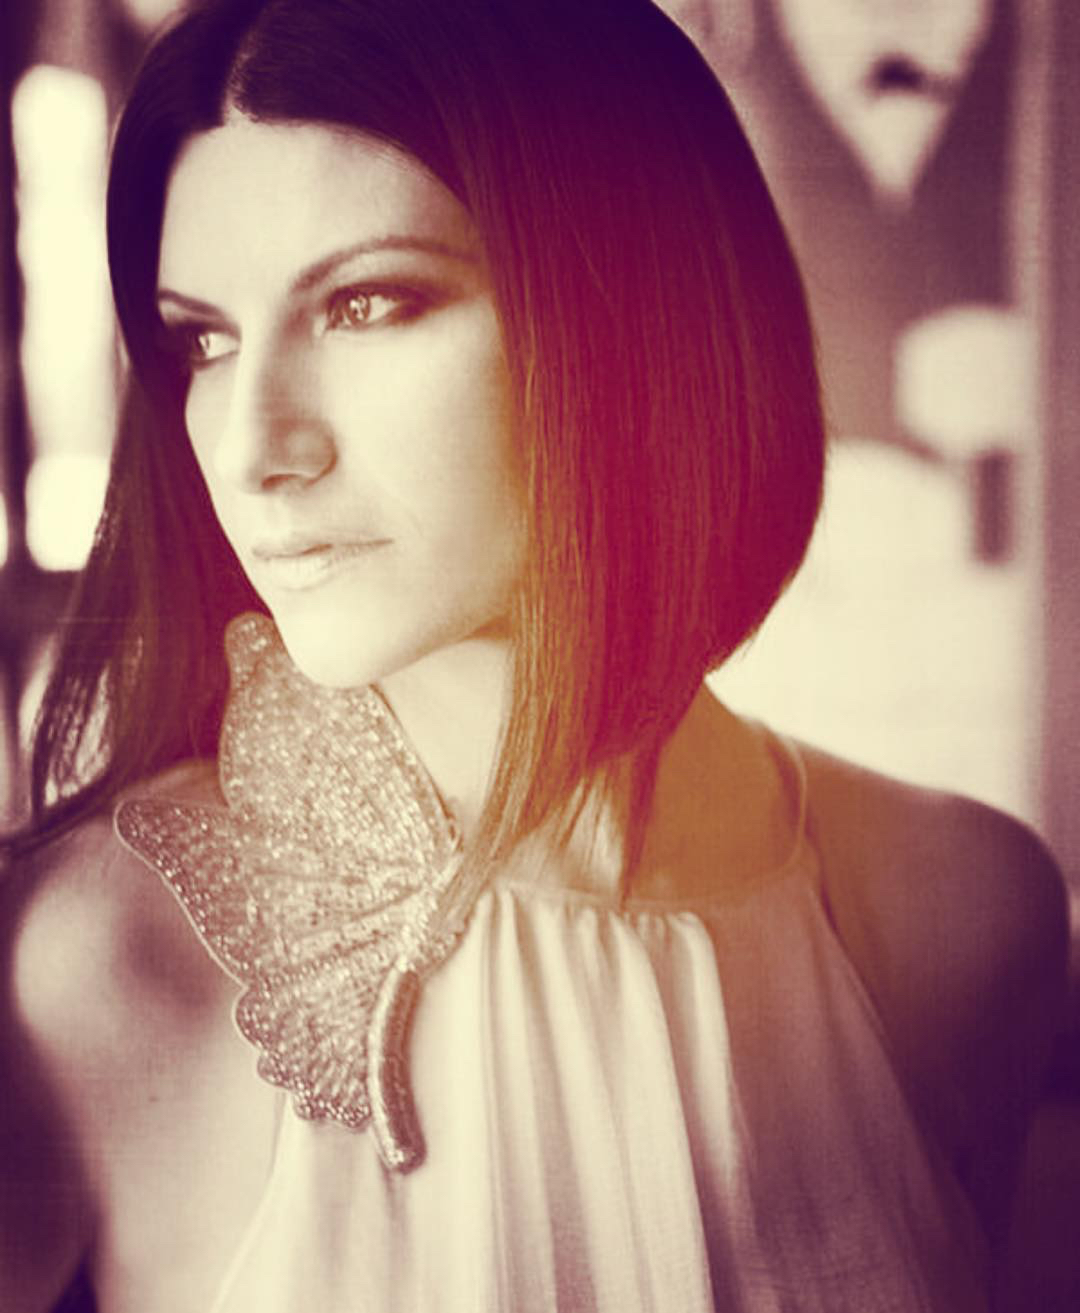 Laura Pausini @Instagram (https://www.instagram.com/p/BrefFSiDE0Y).